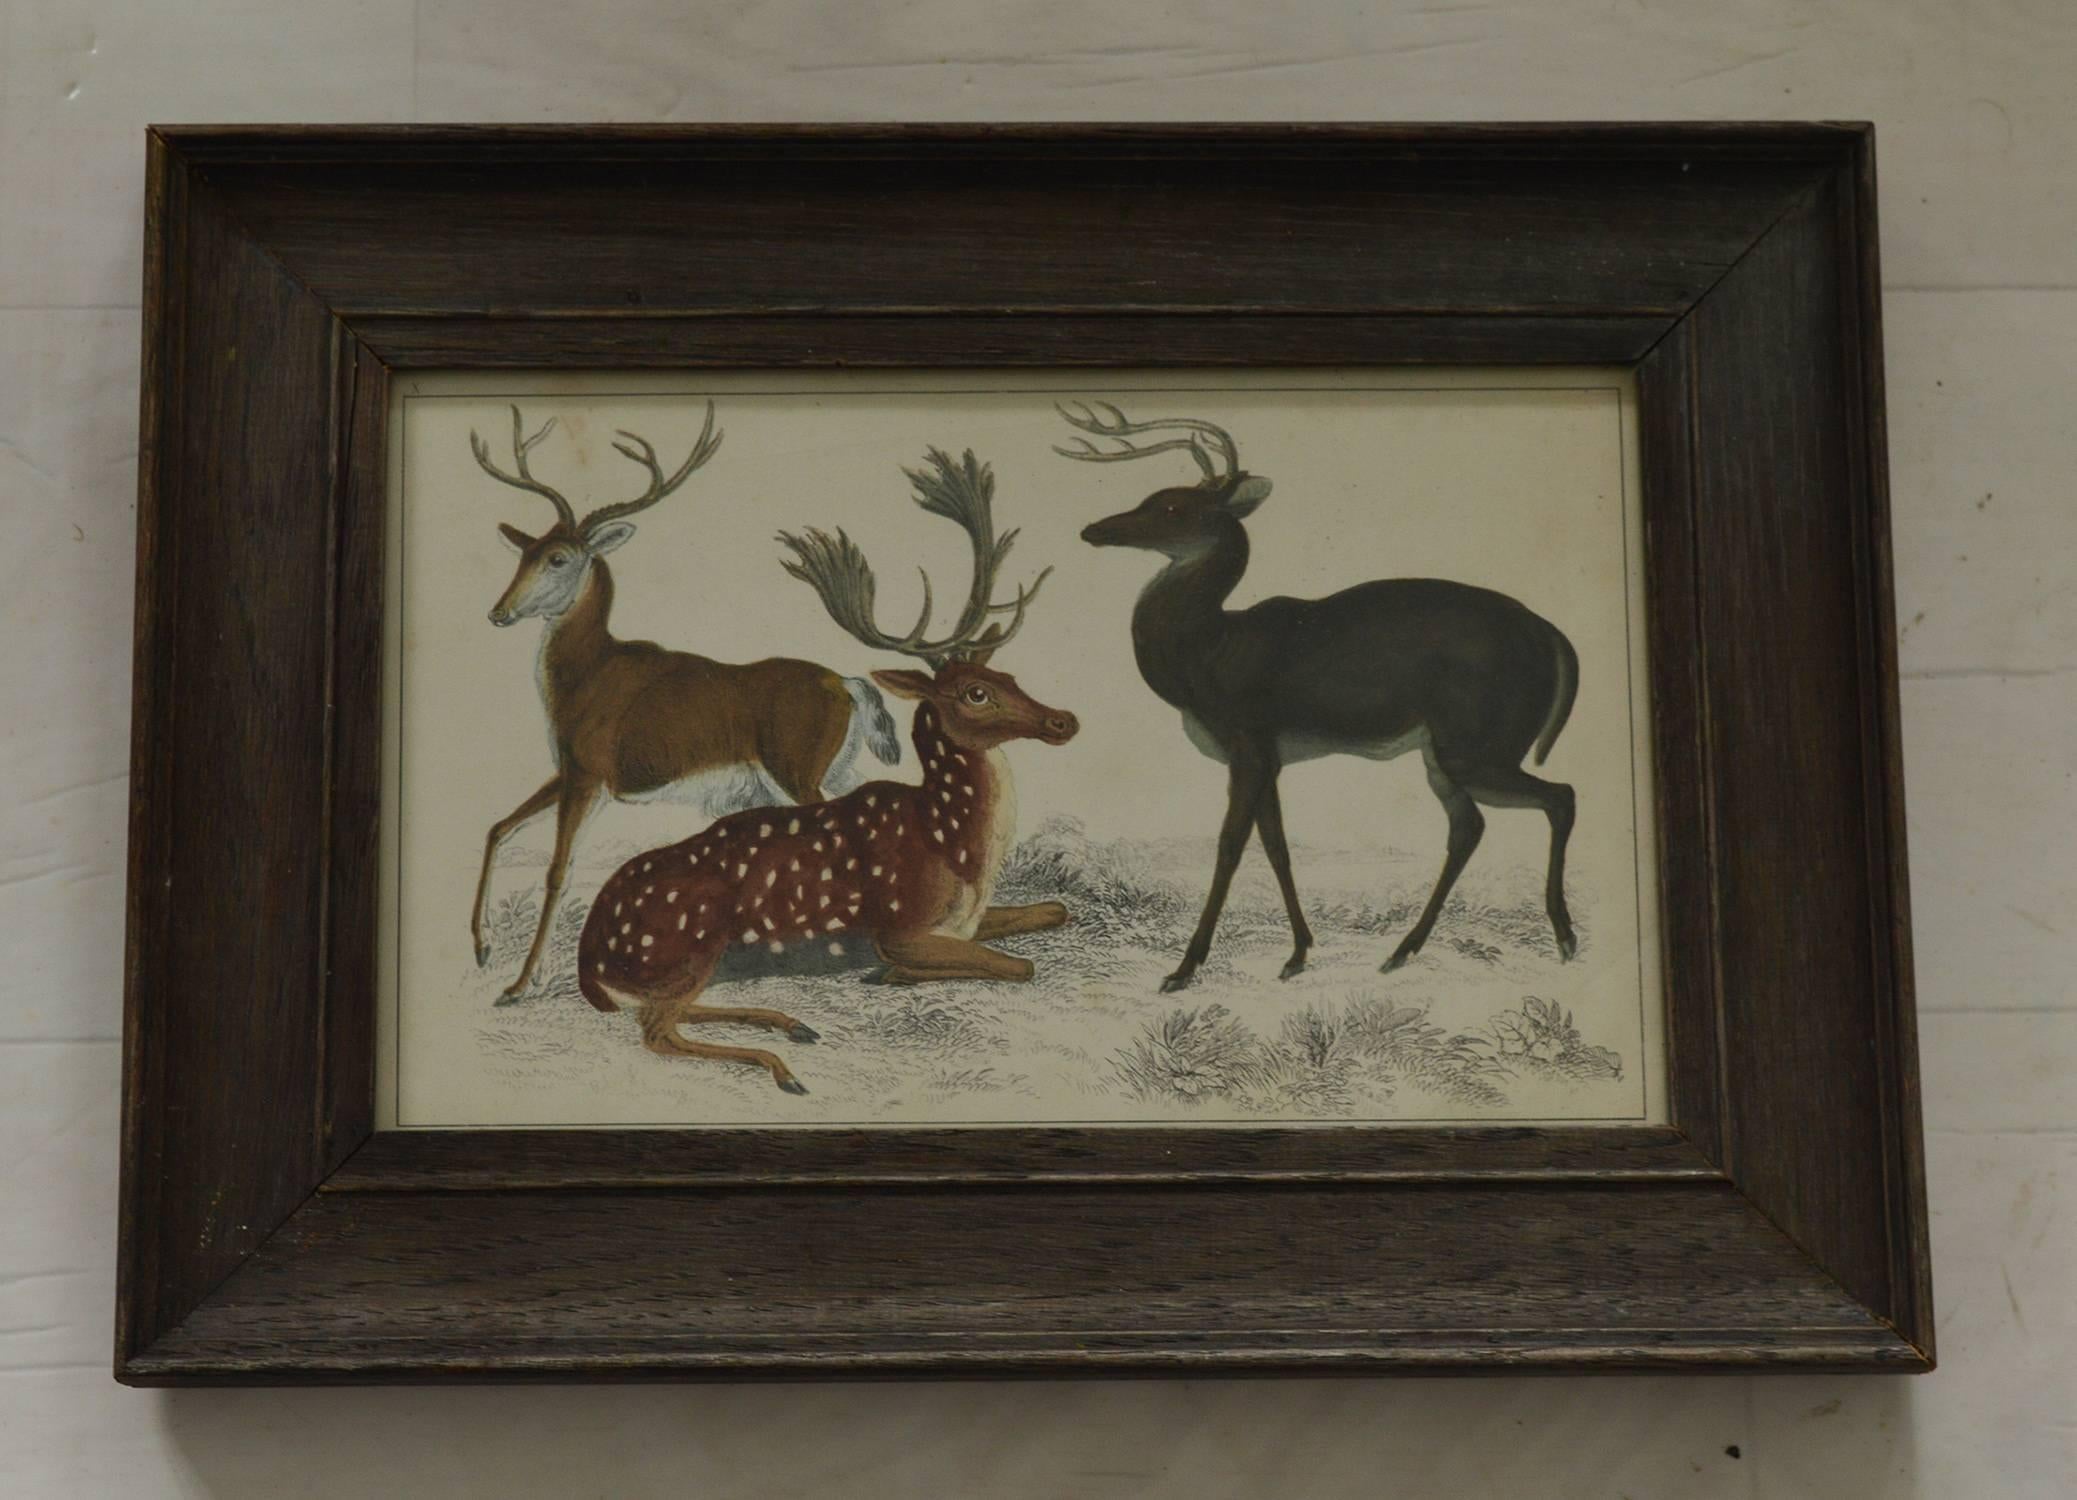 Folk Art Original Antique Print of Deer, English, circa 1850